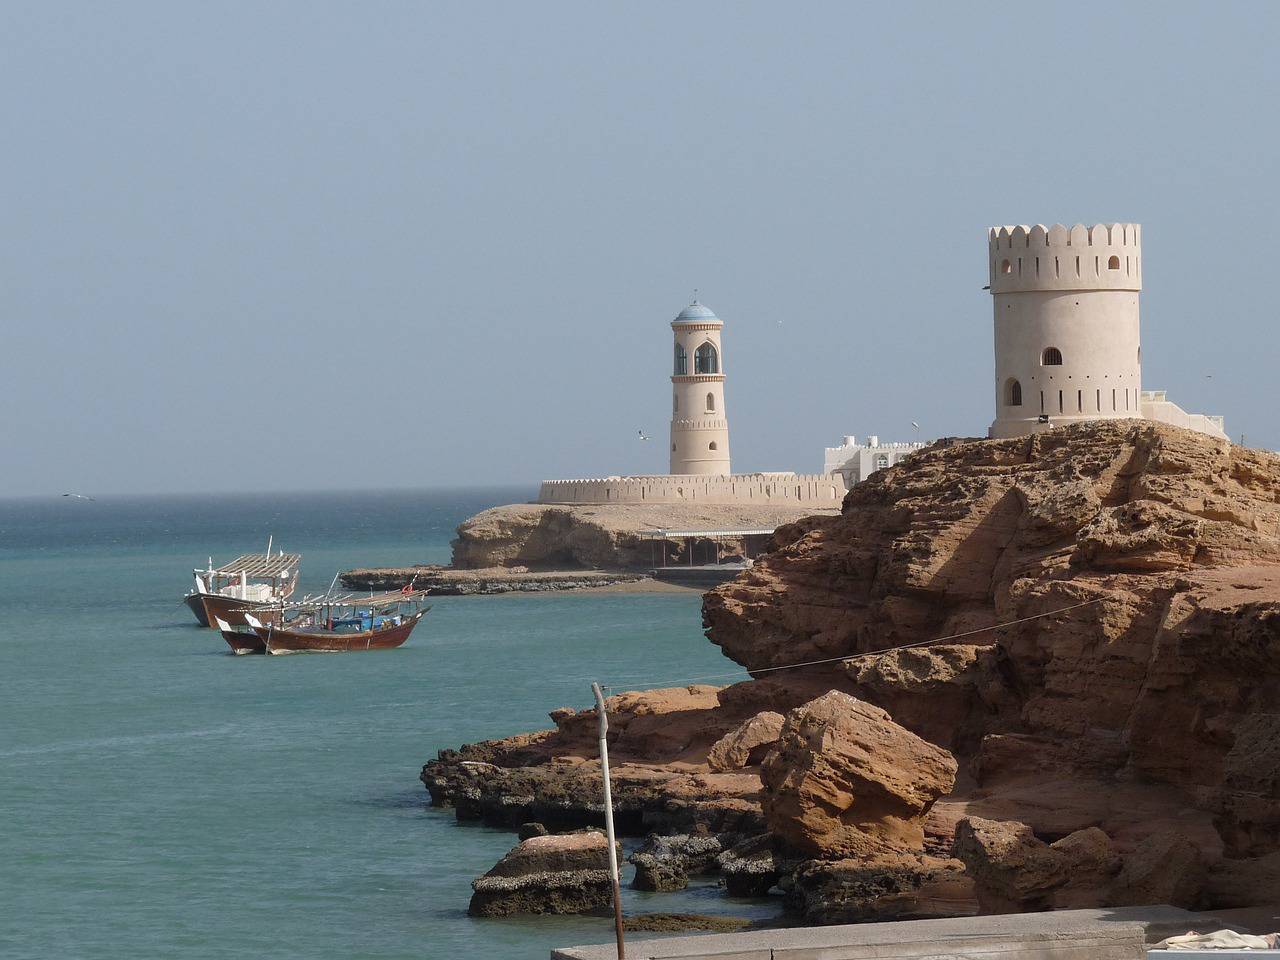 Oman tourism